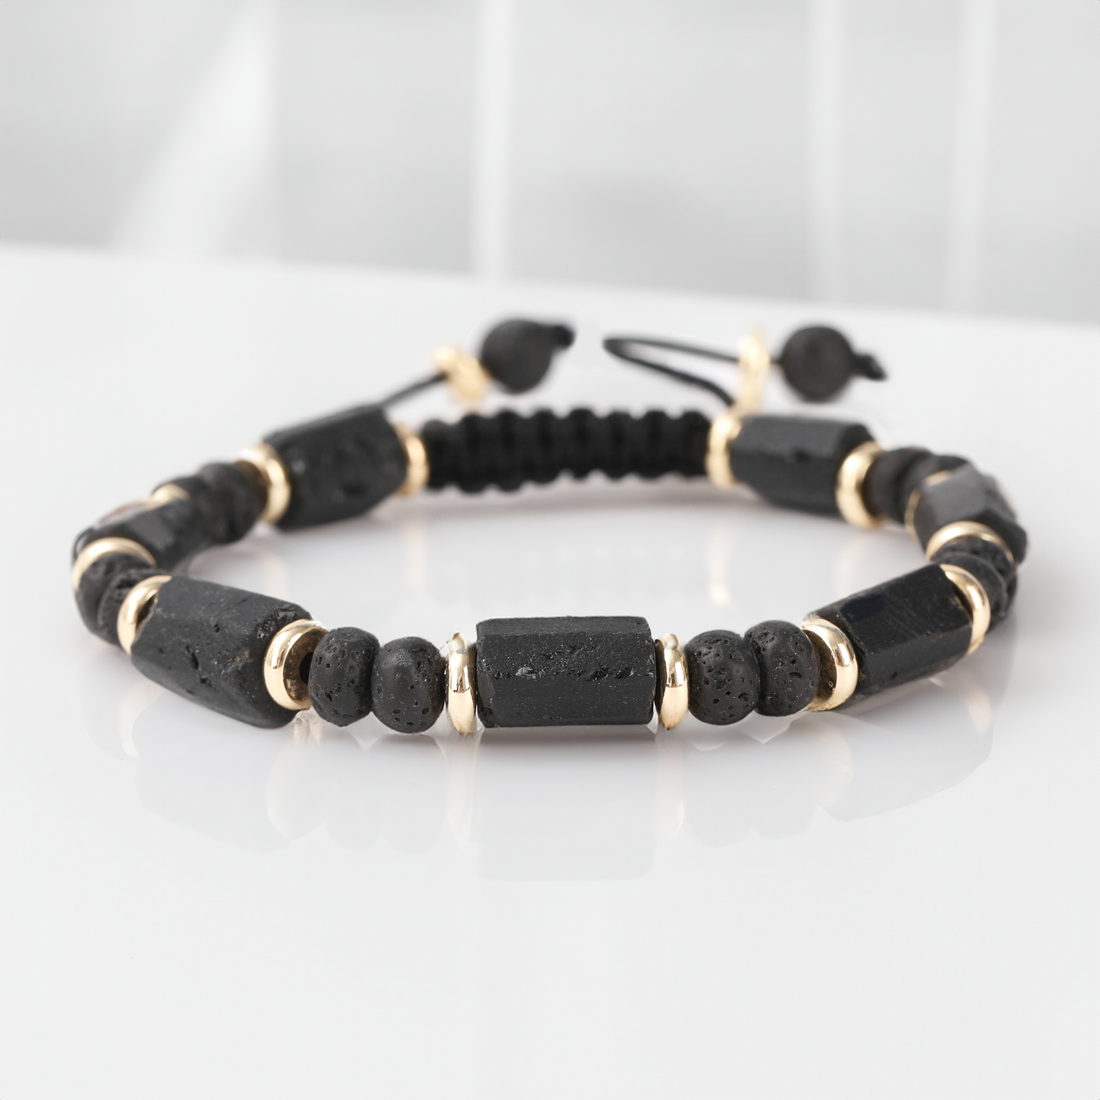 Black Tourmaline Bracelet - Handmade Natural Stone 7 pc Black Tourmaline - Lava Rock Beads - Adjustable - Men's Women's Jewelry - Healing Therapy Protection